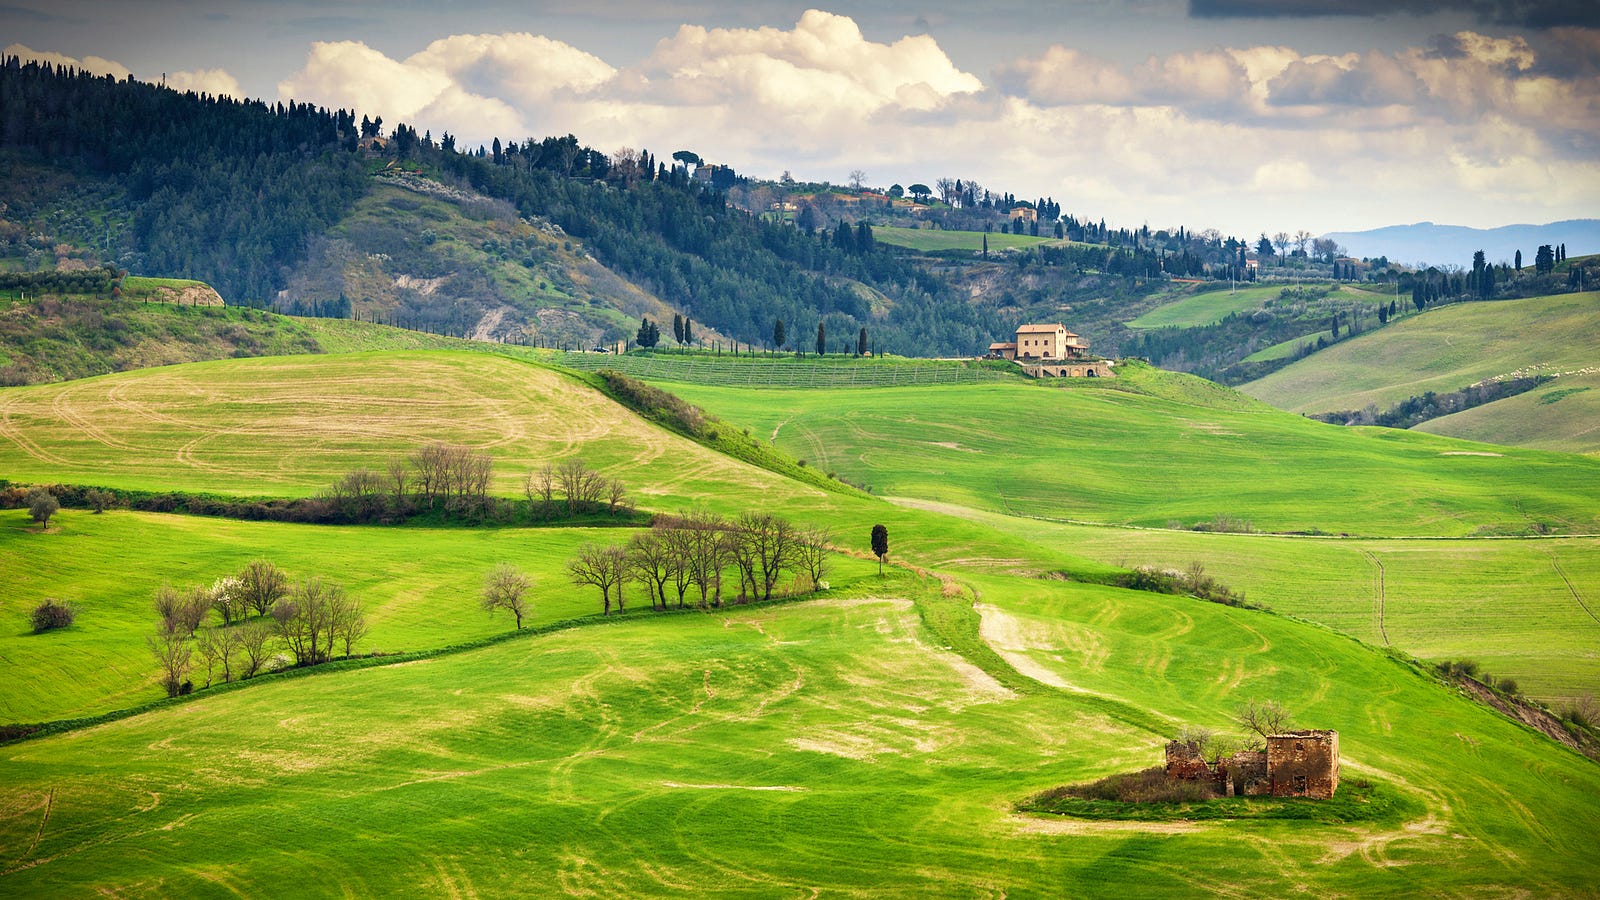 Tuscan hills near Volterra, Italy